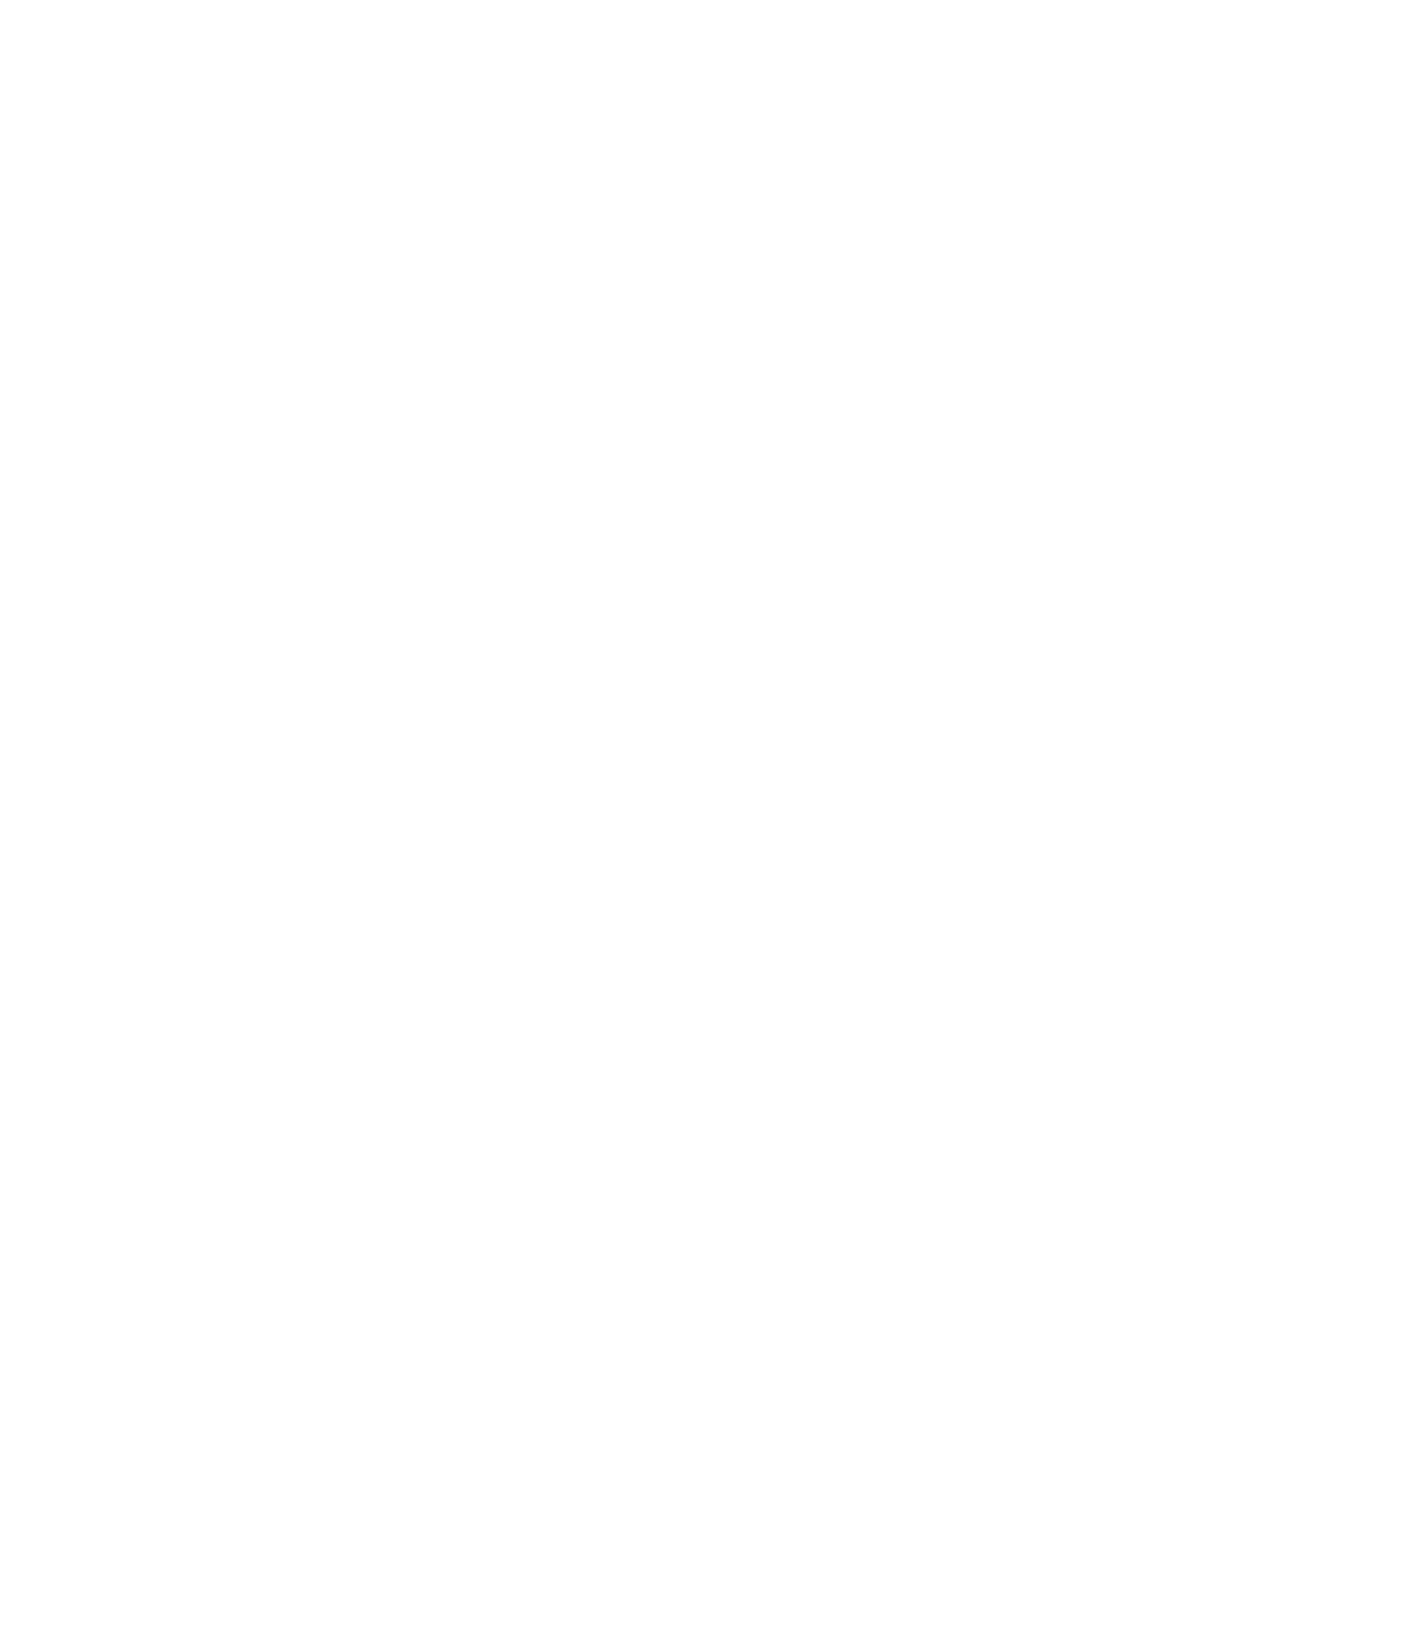 DeNA logo pour fonds sombres (PNG transparent)